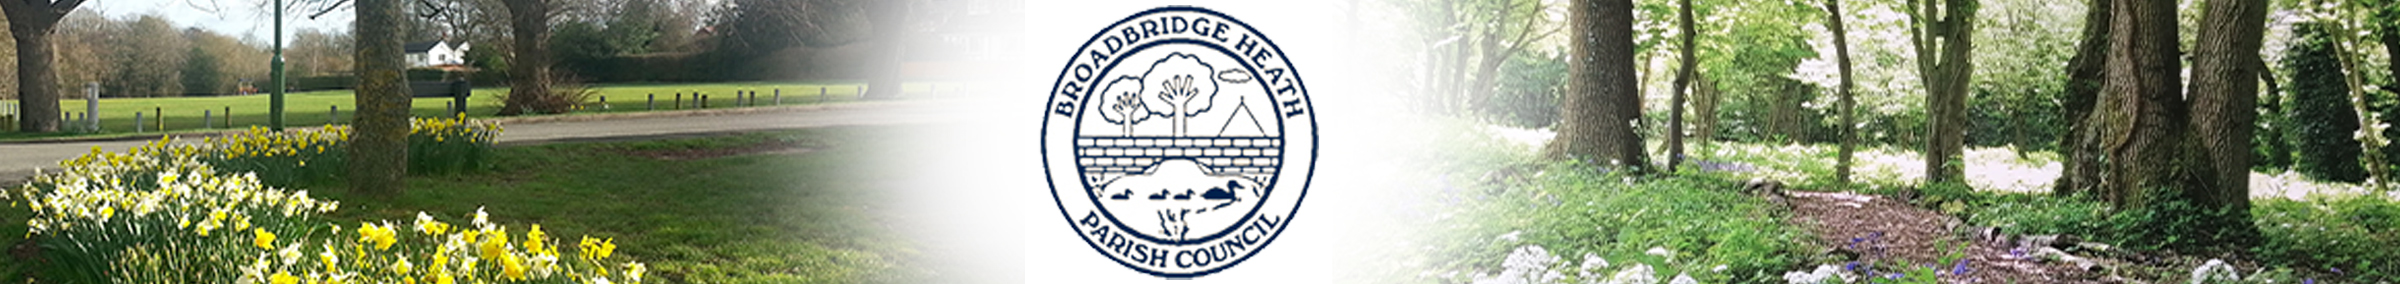 Header Image for Broadbridge Heath Parish Council